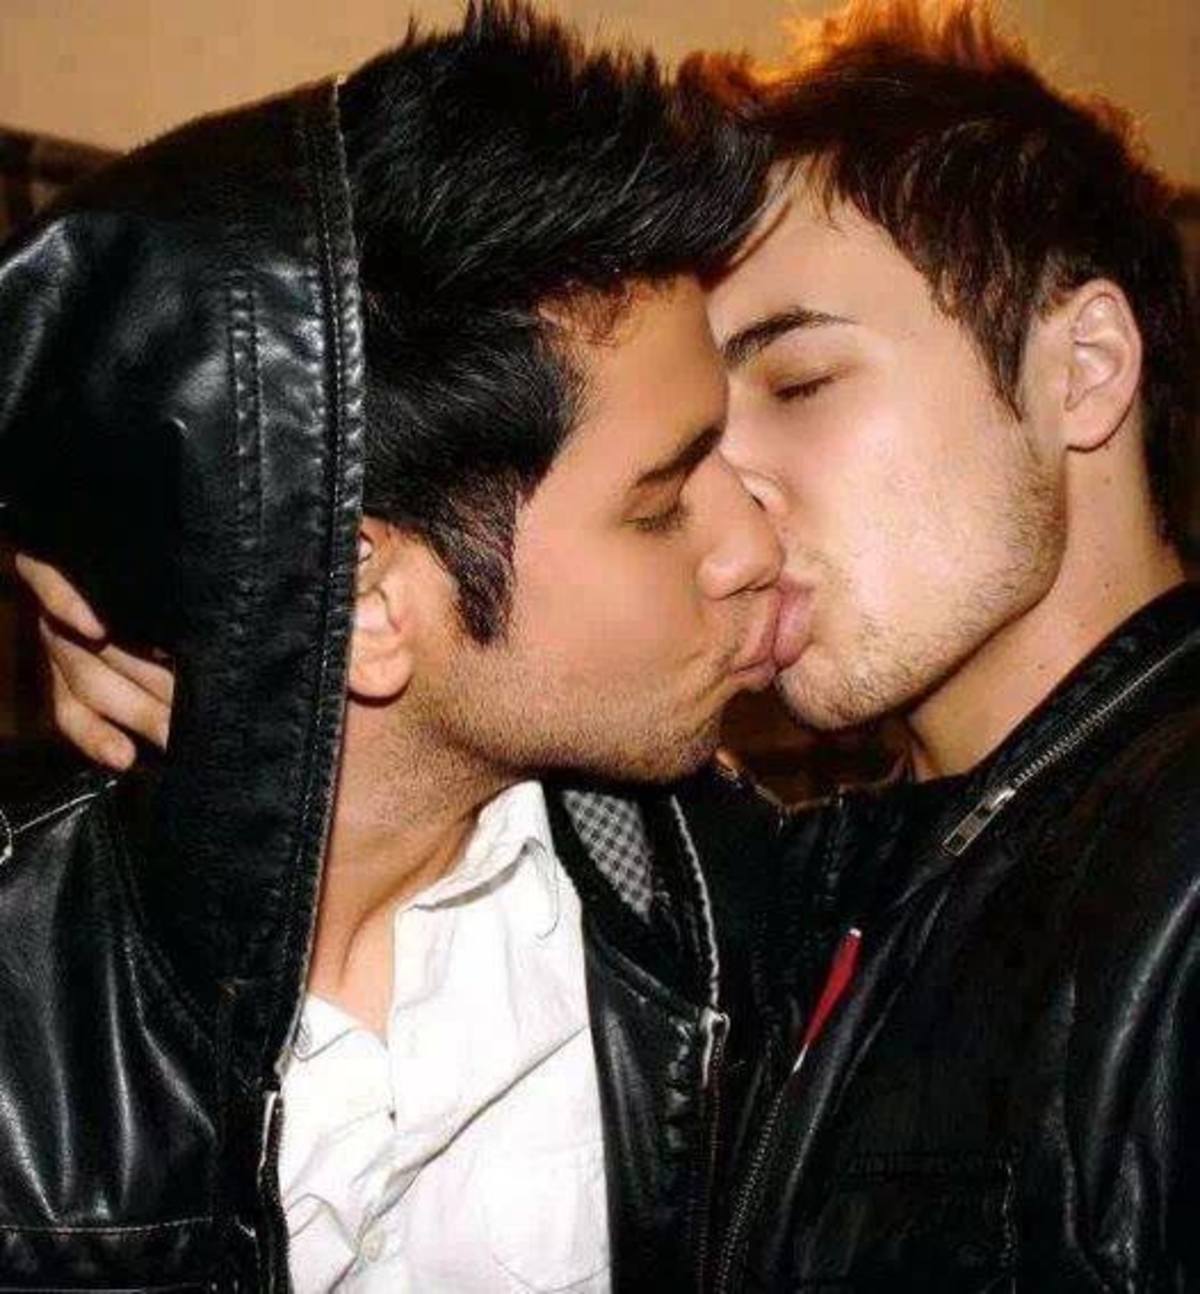 фото как геи целуются фото 97